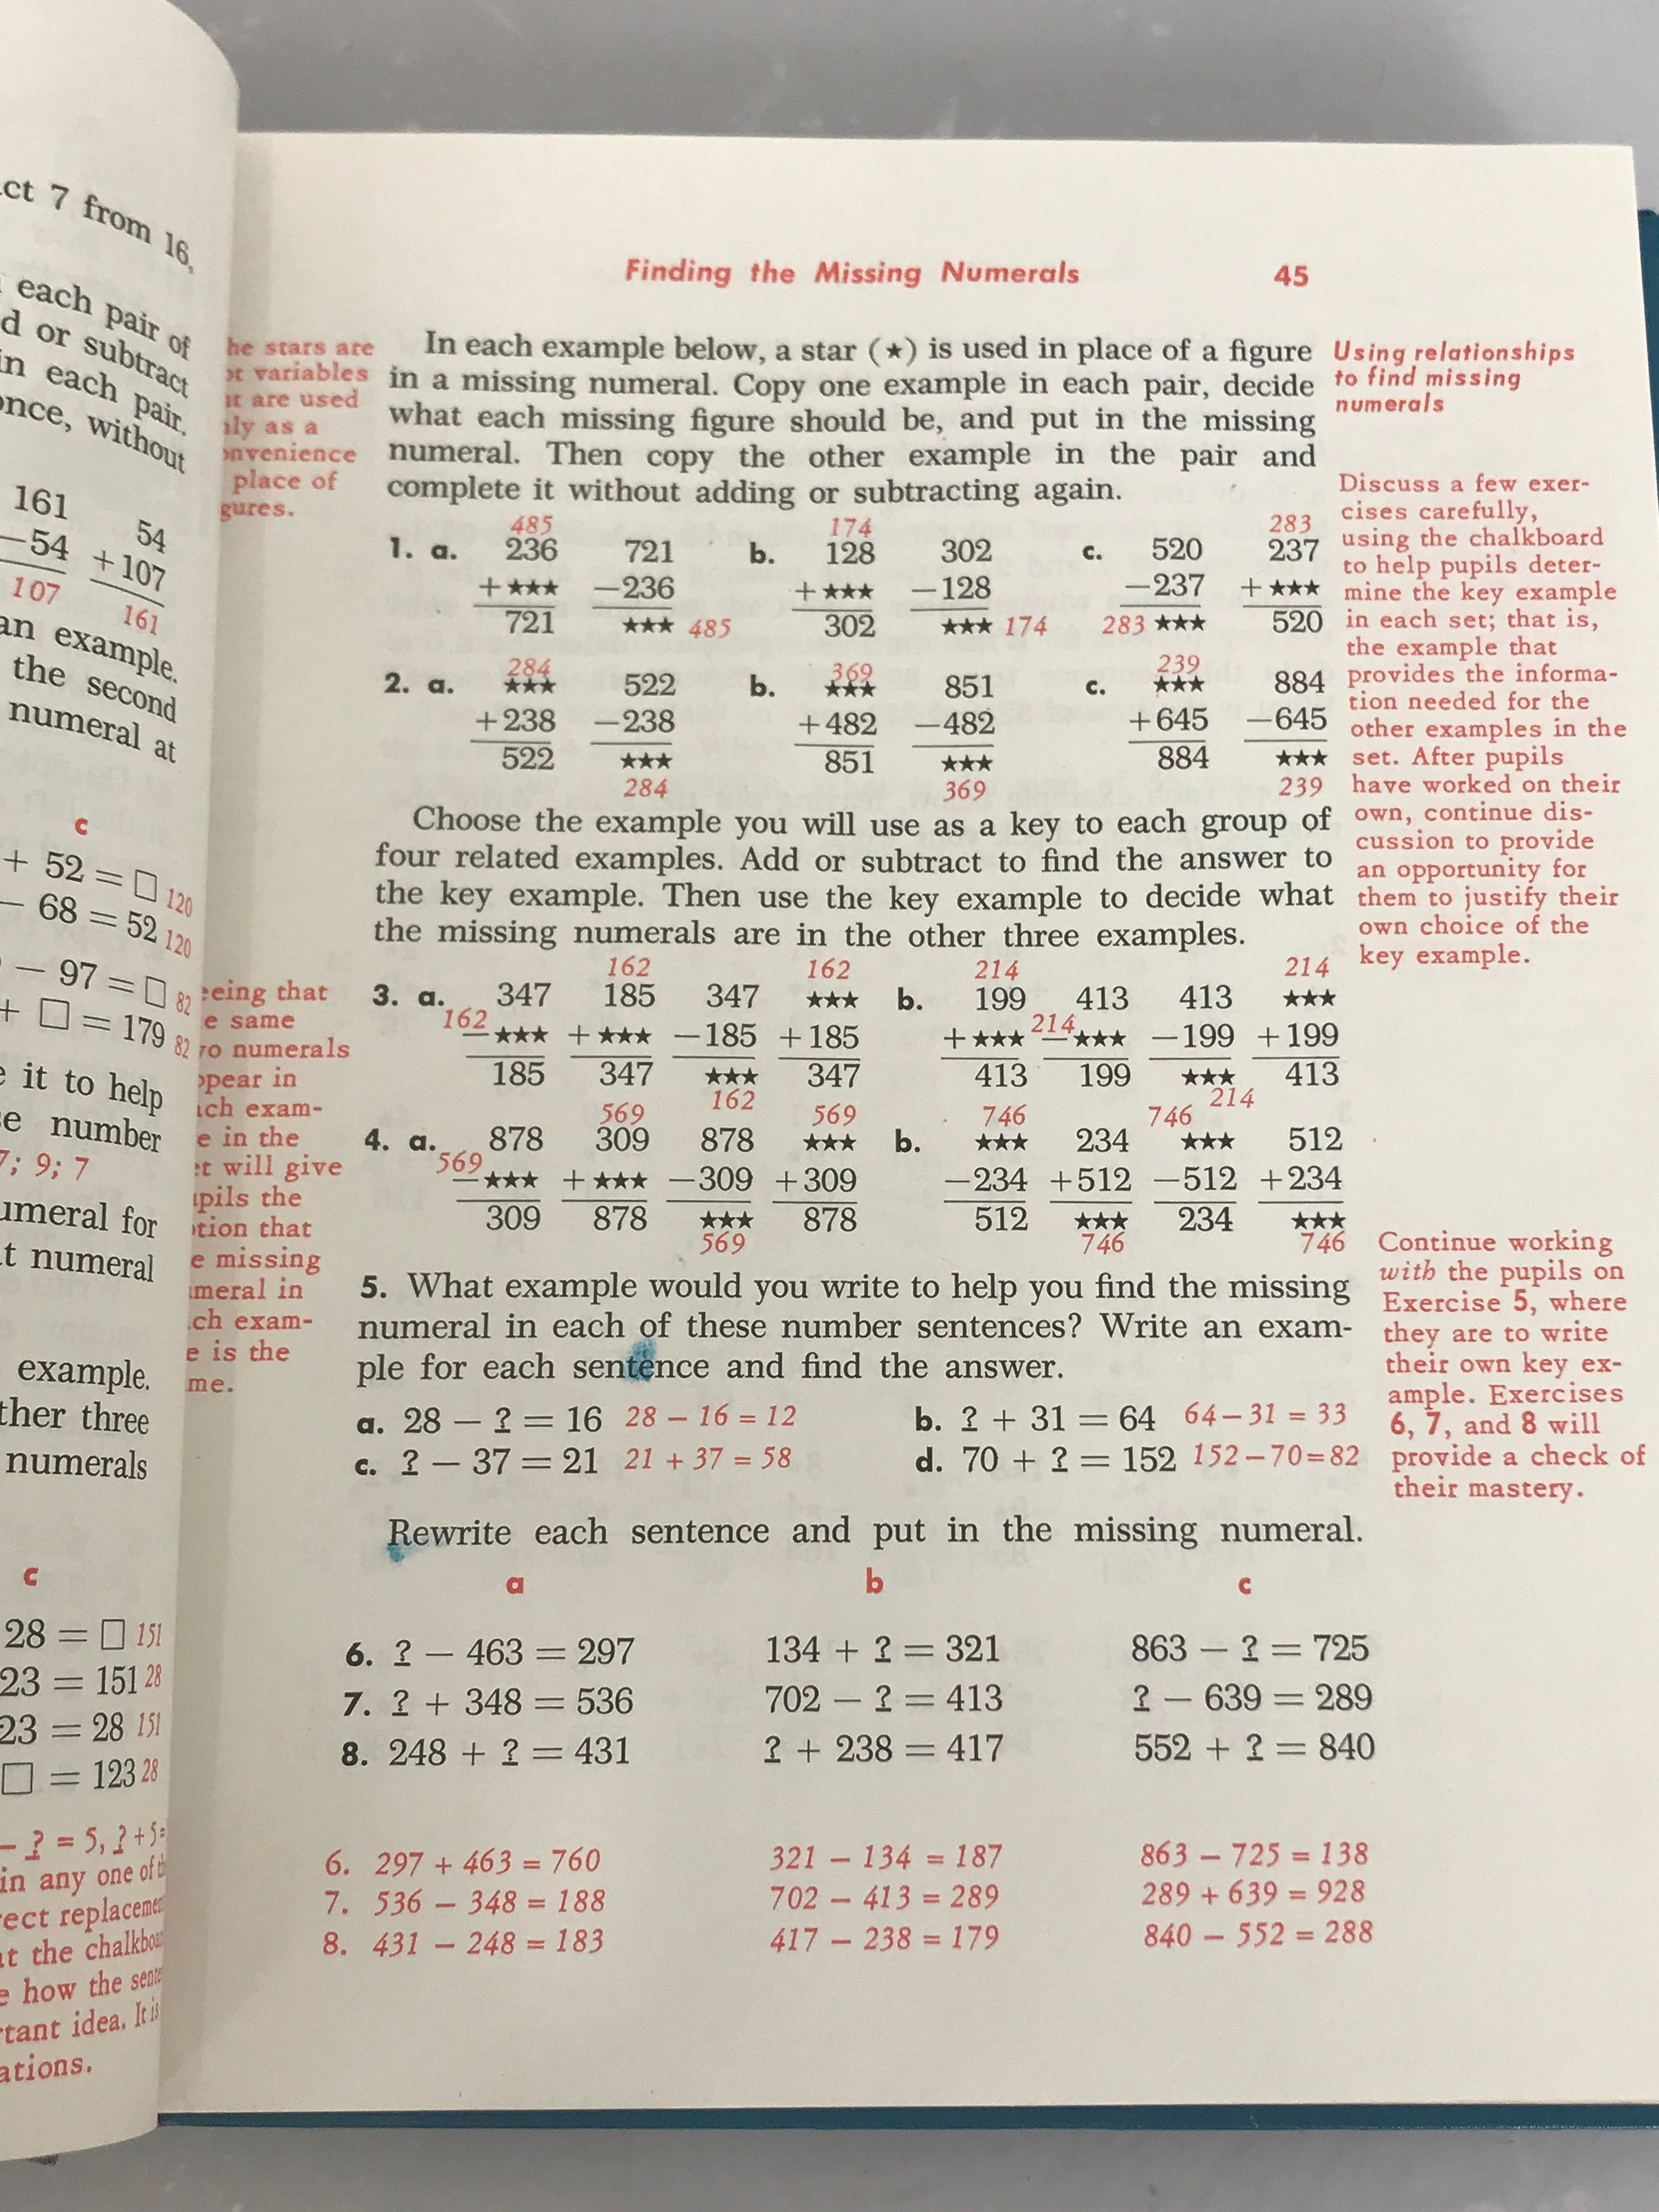 Textbook: Modern Arithmetic Through Discovery Teacher's Edition (1963) HC Vintage